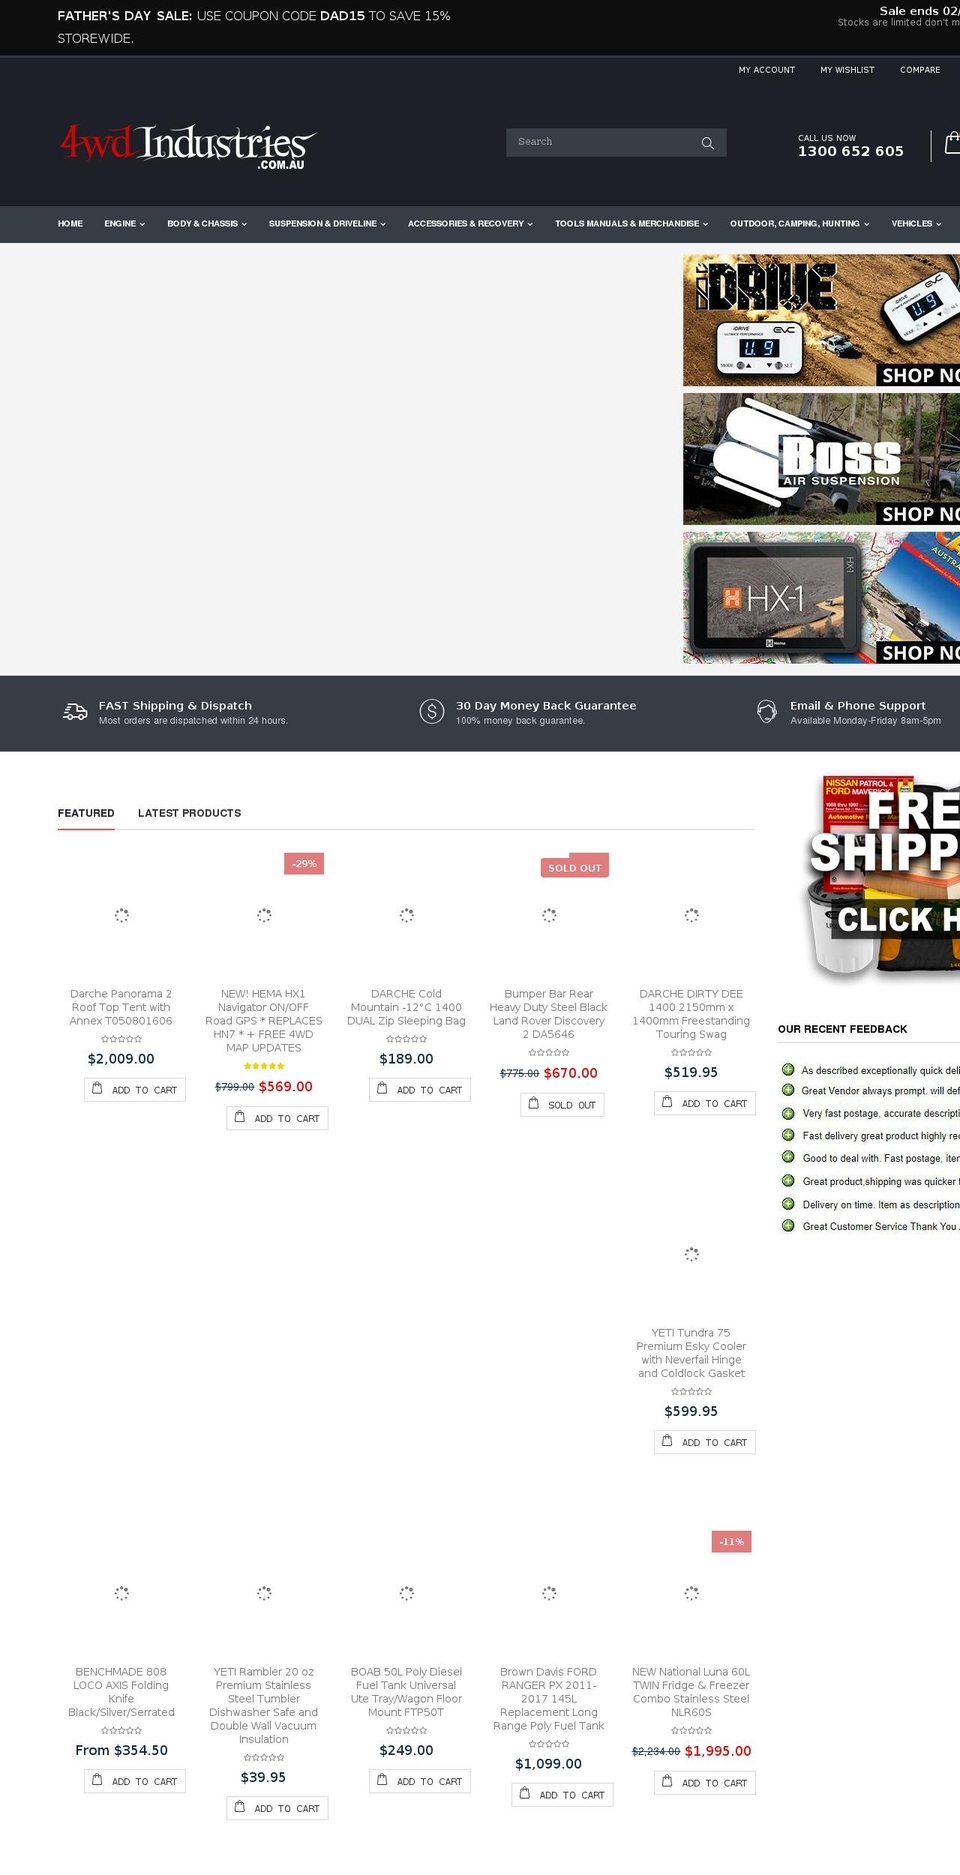 4wdindustries.com.au shopify website screenshot